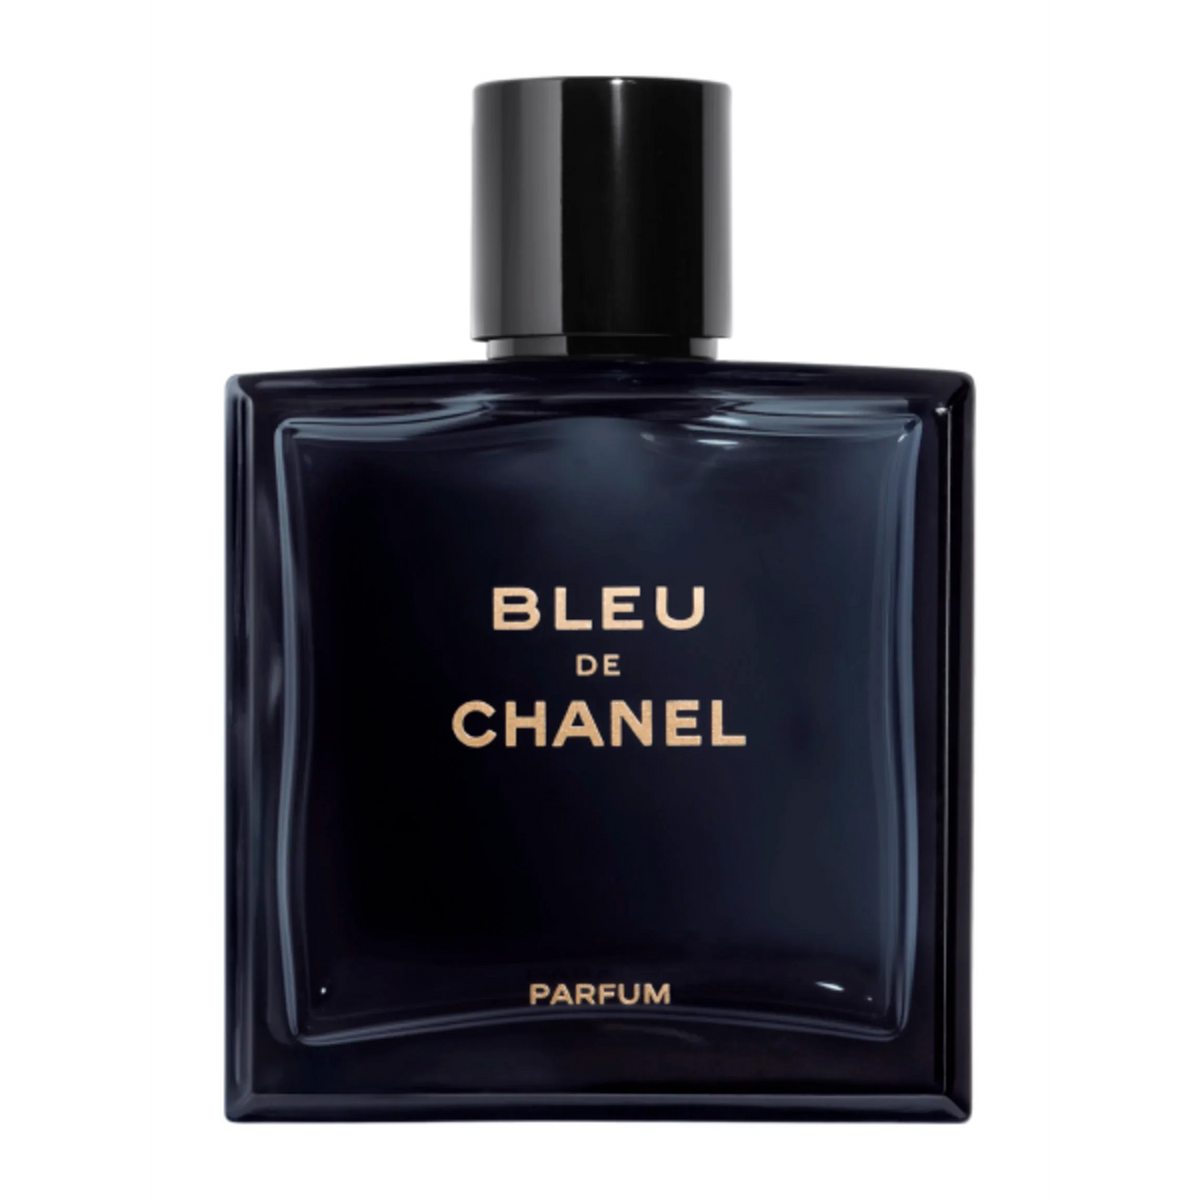 Chanel Bleu de Chanel (Parfum) Sample